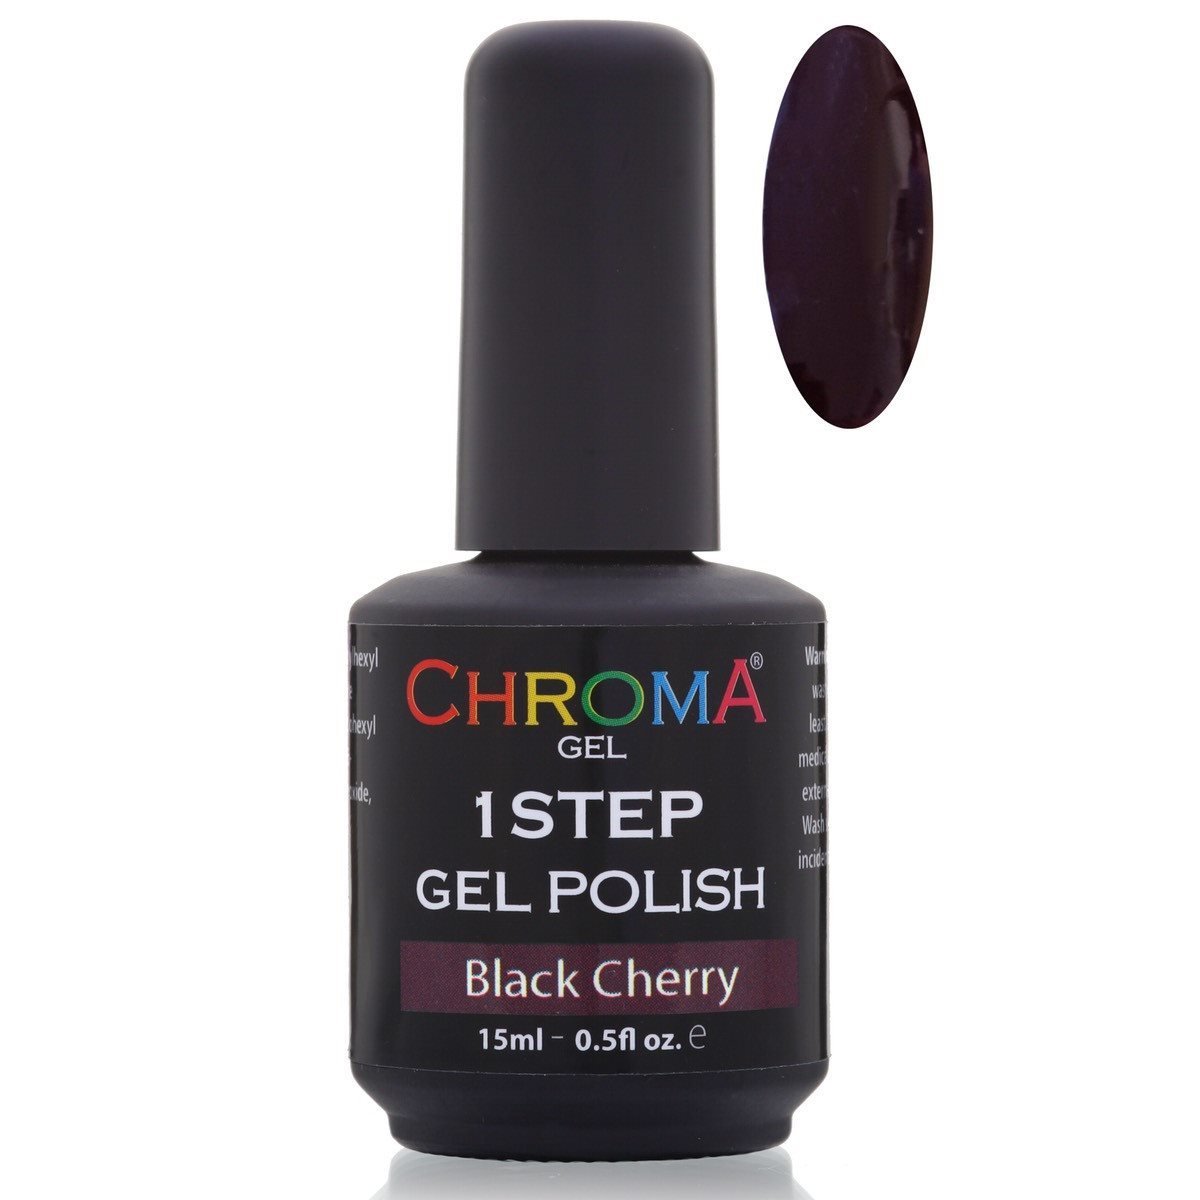 Chroma Gel 1 Step Gel Polish Black Cherry No.29 - Chroma Gel